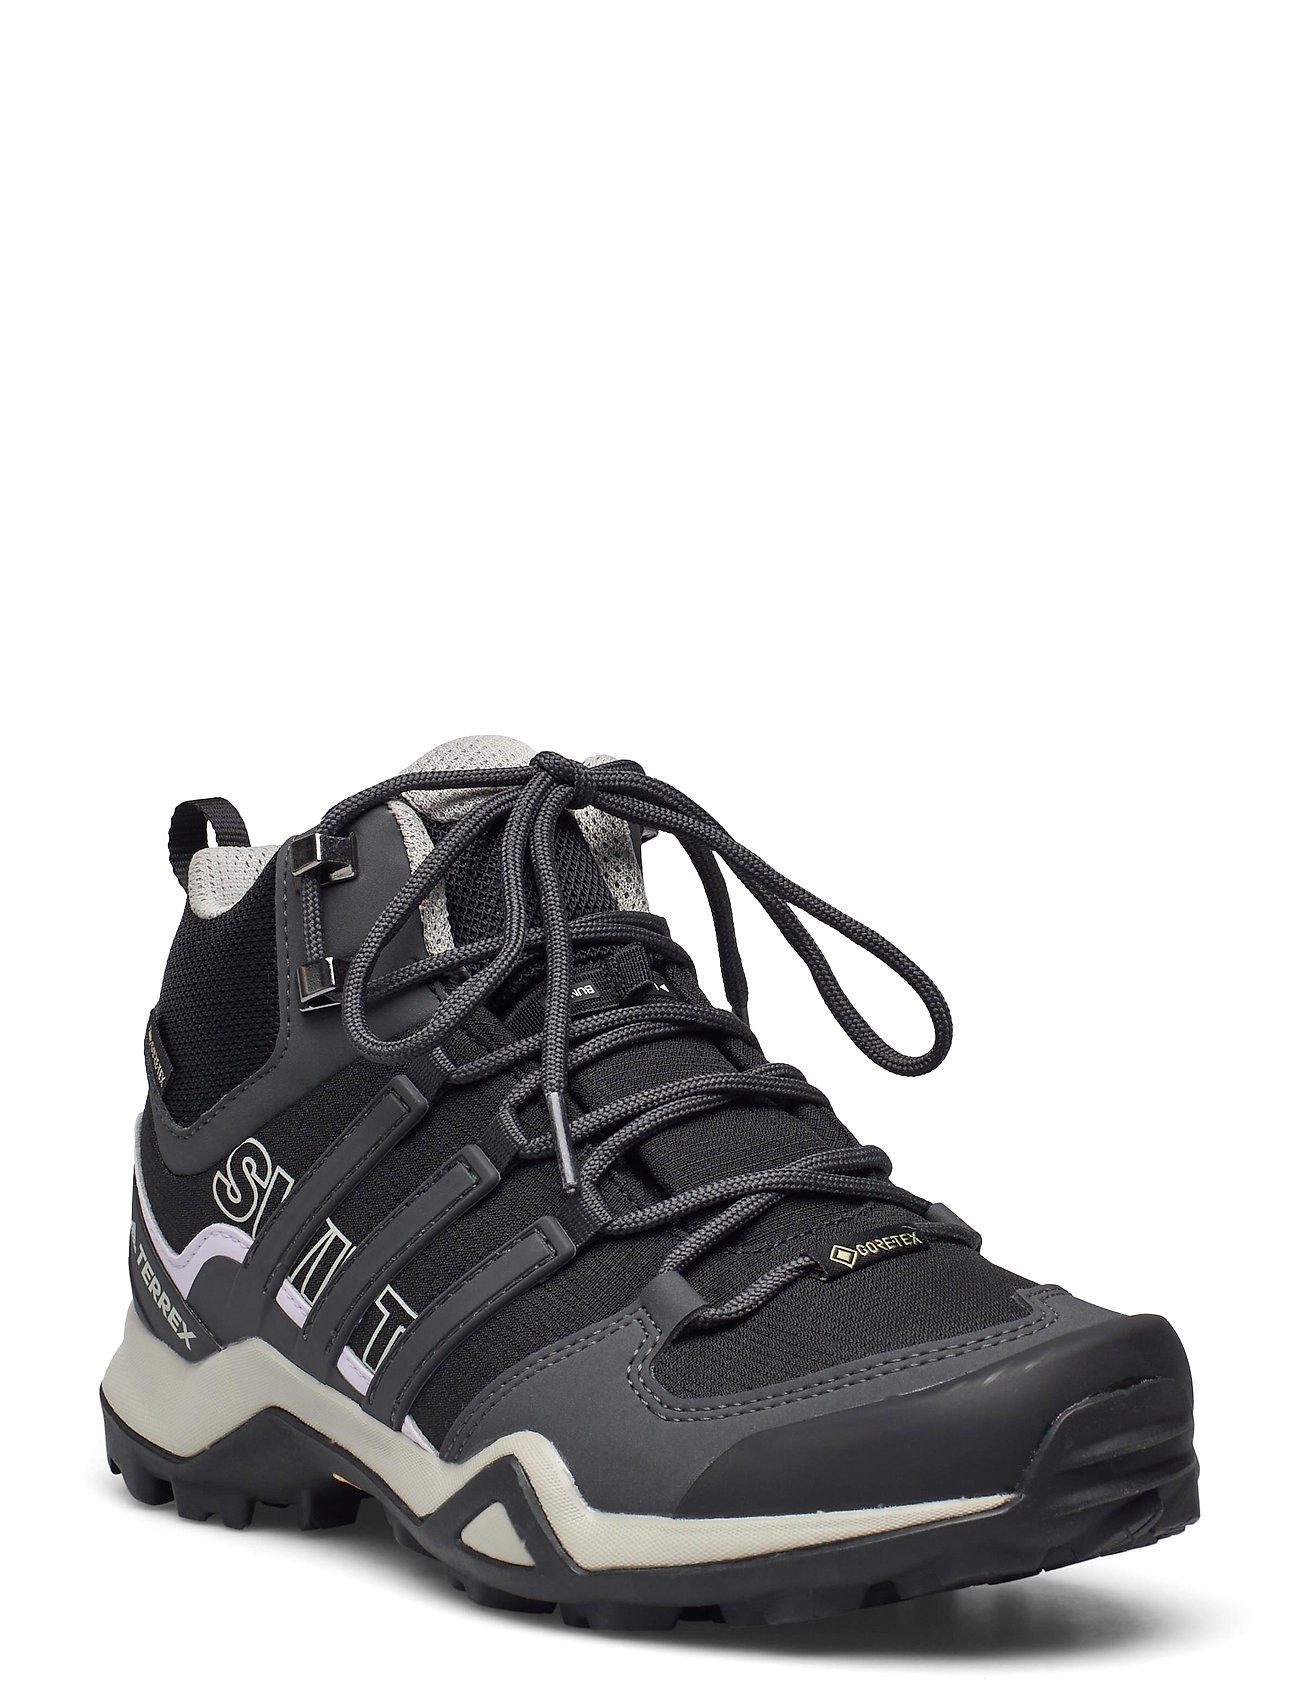 "adidas Terrex" "Terrex Swift R2 Mid Gtx Shoes Sport Outdoor-hiking Black Adidas